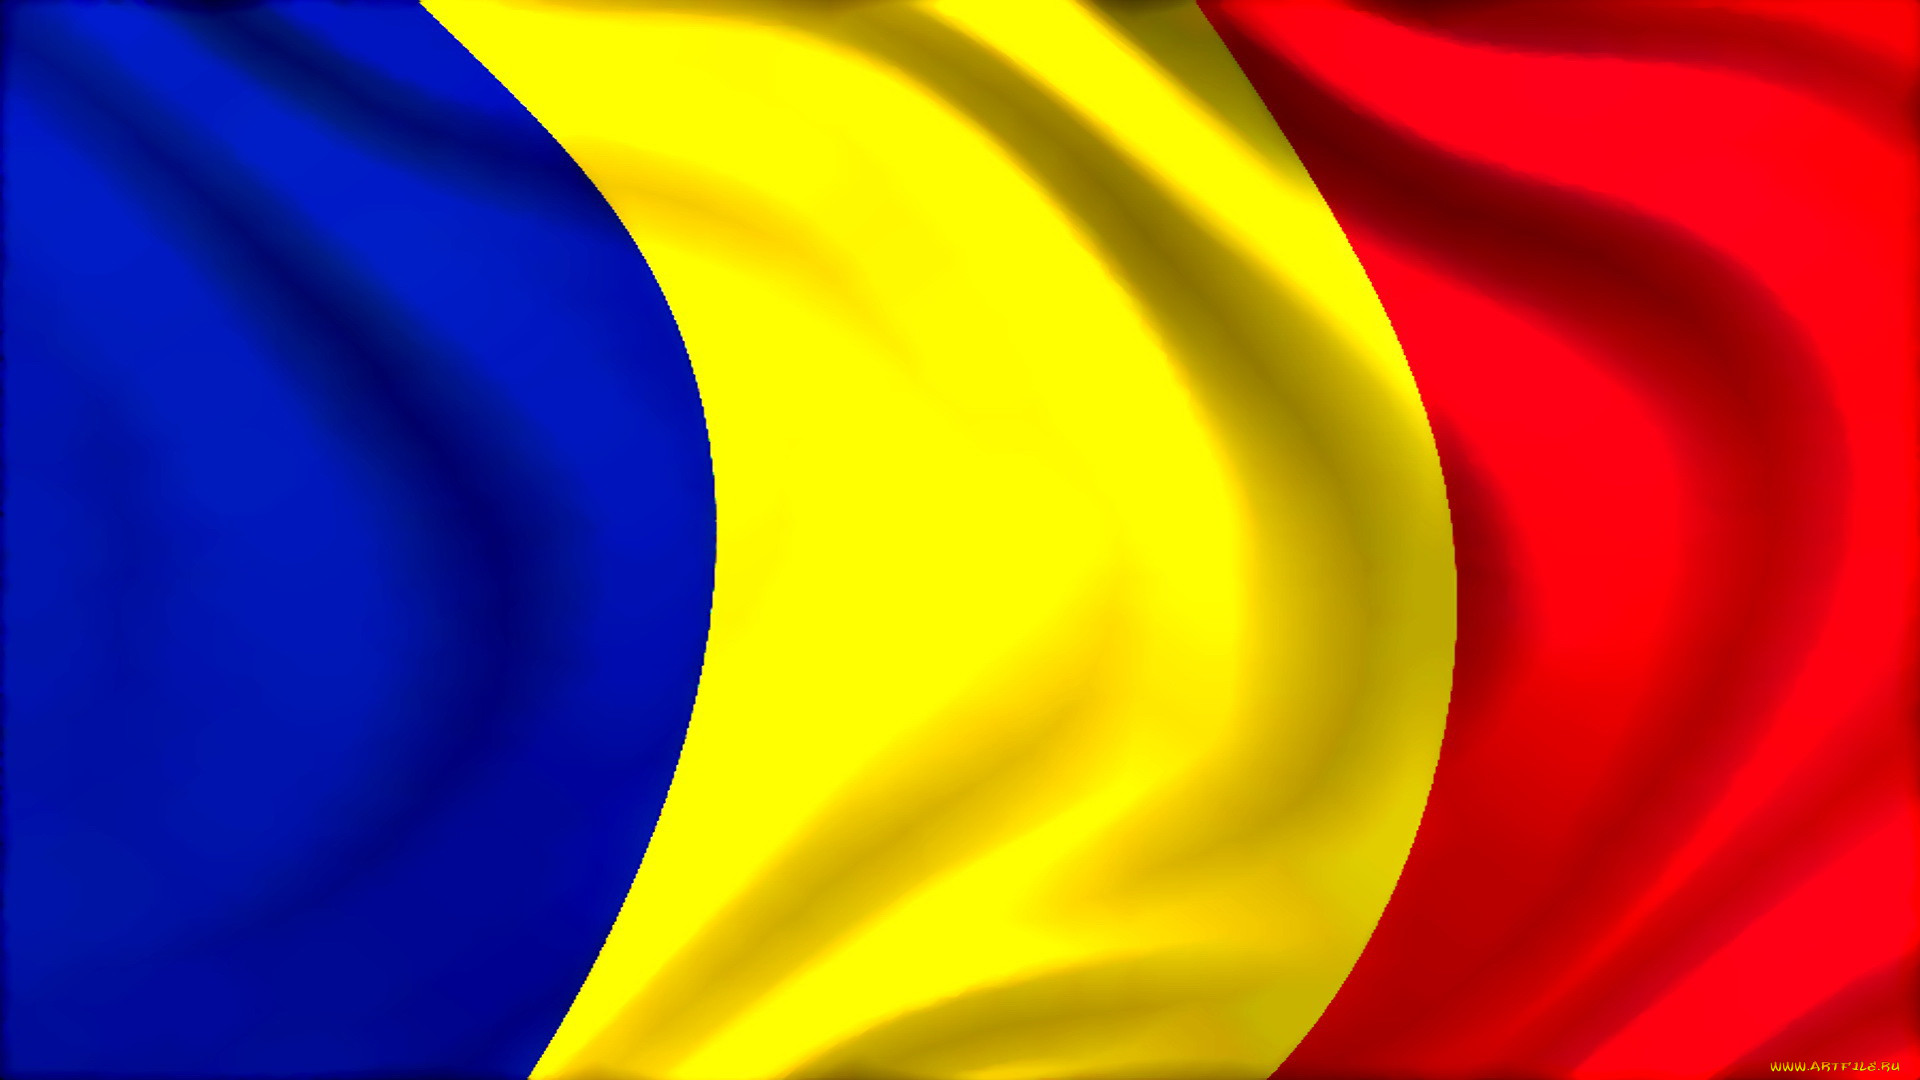 Флаг и герб румынии